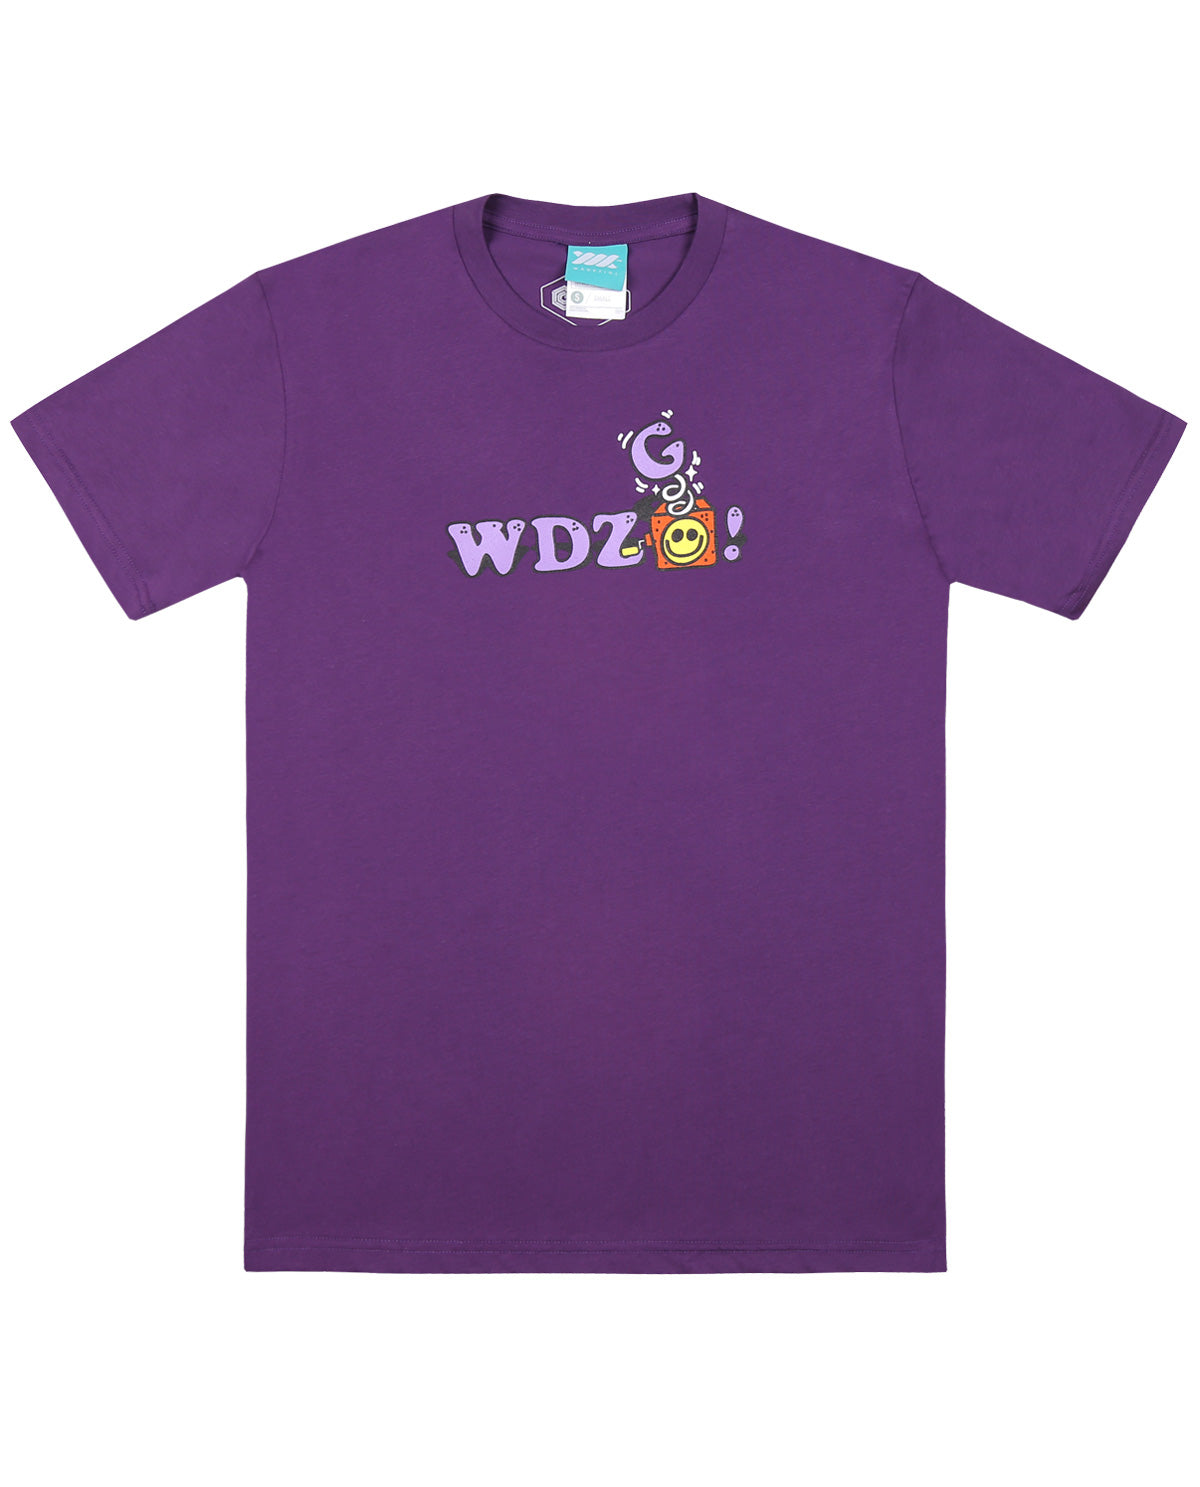 Wadezig! Tshirt - Pranked Purple